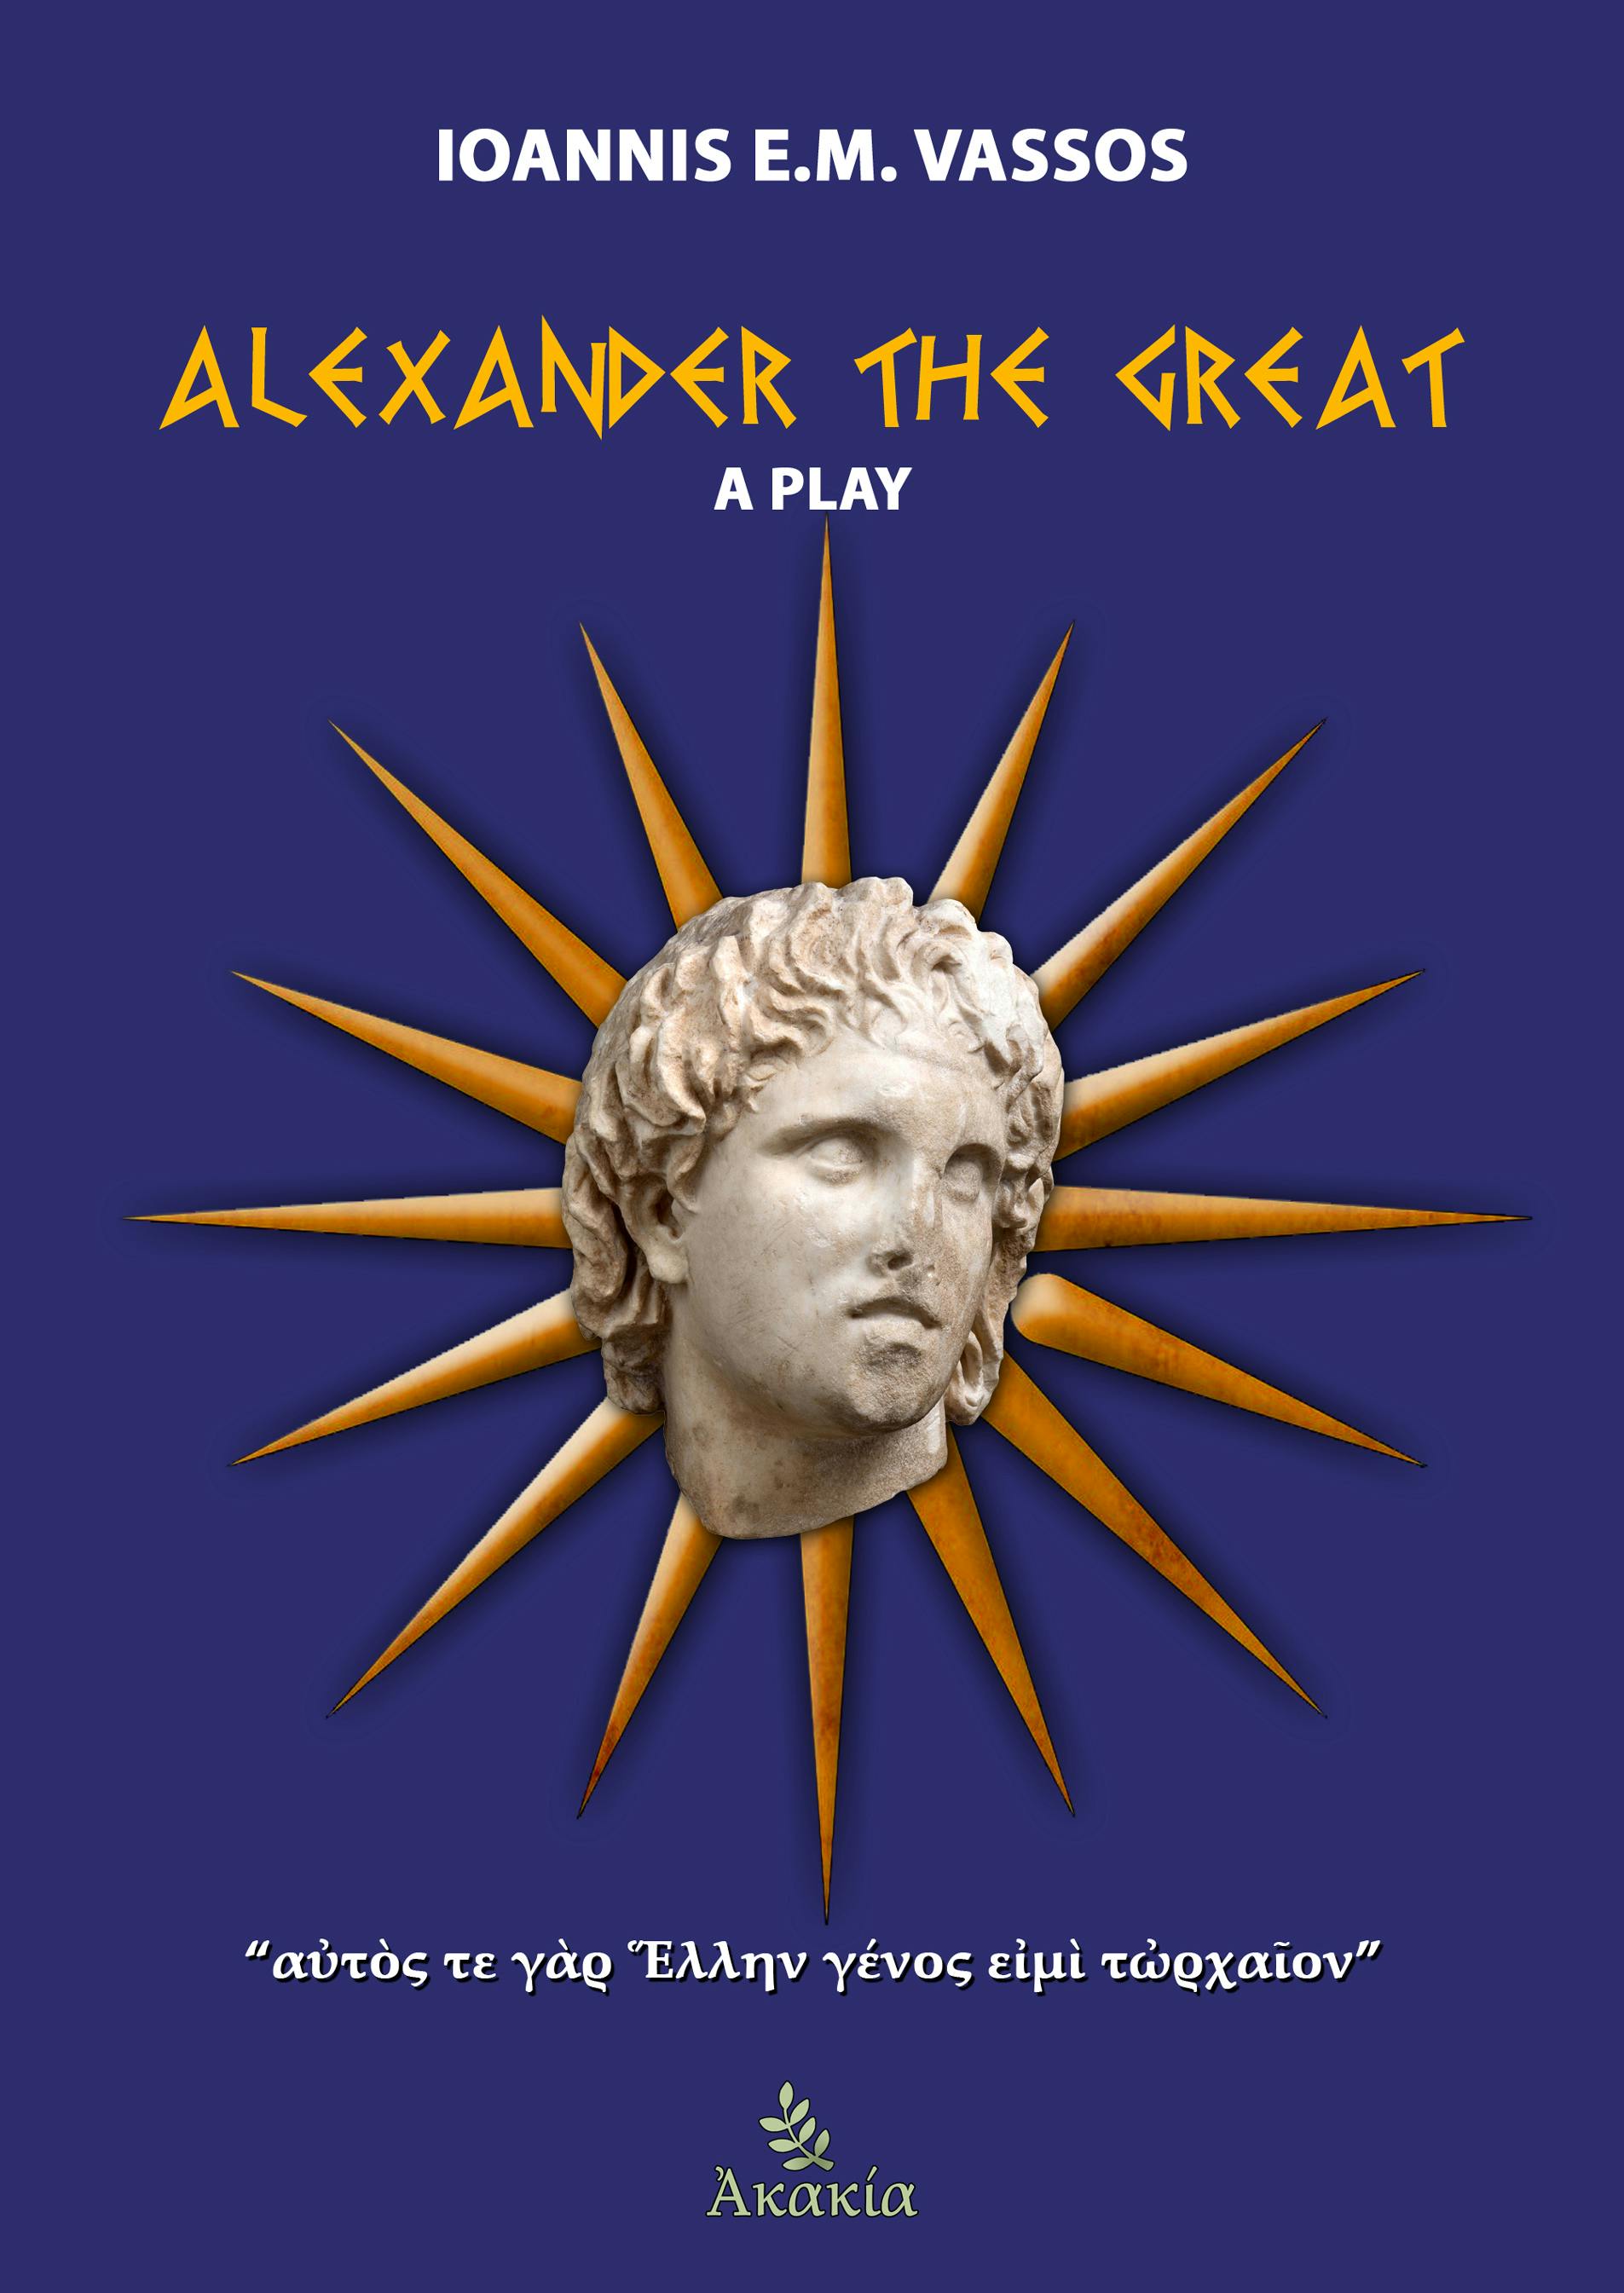 Alexander the Great - Ioannis E. M. Vassos